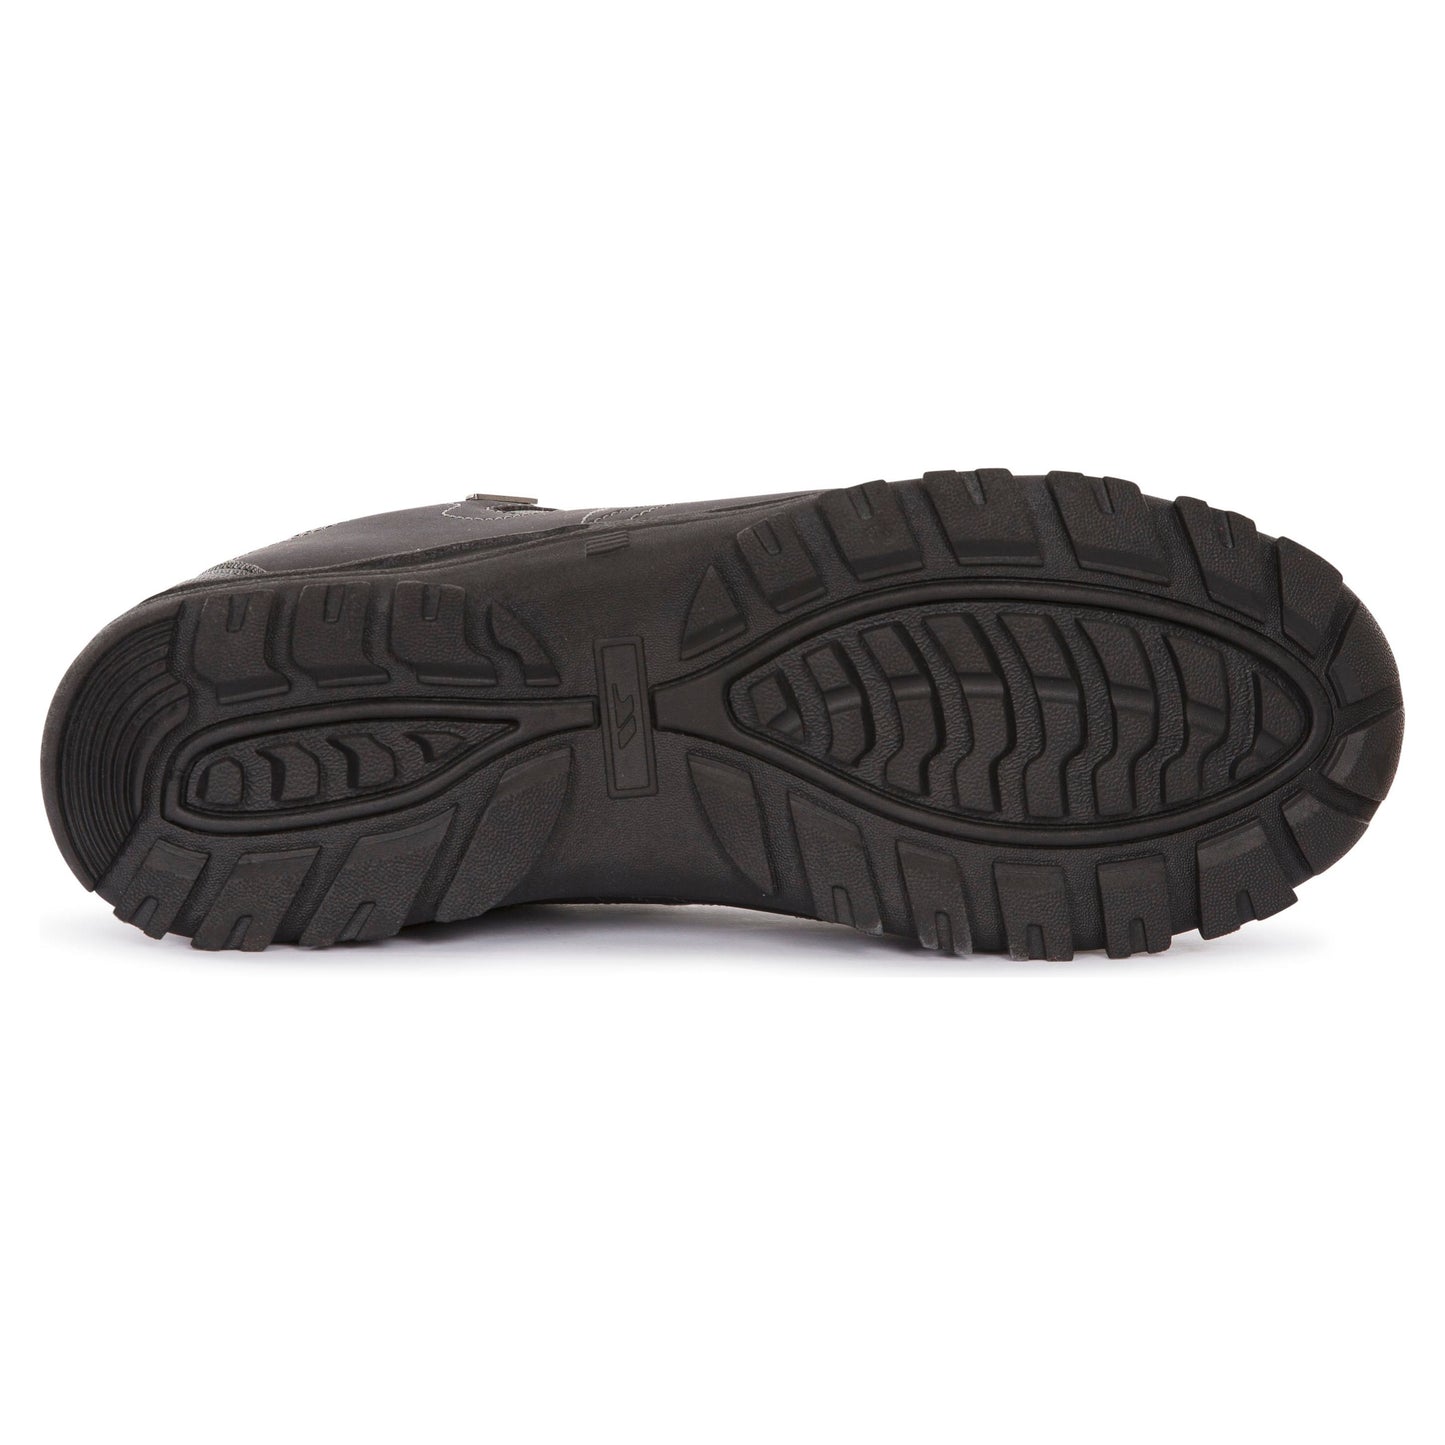 Finley Men's Waterproof Walking Shoes - Graphite